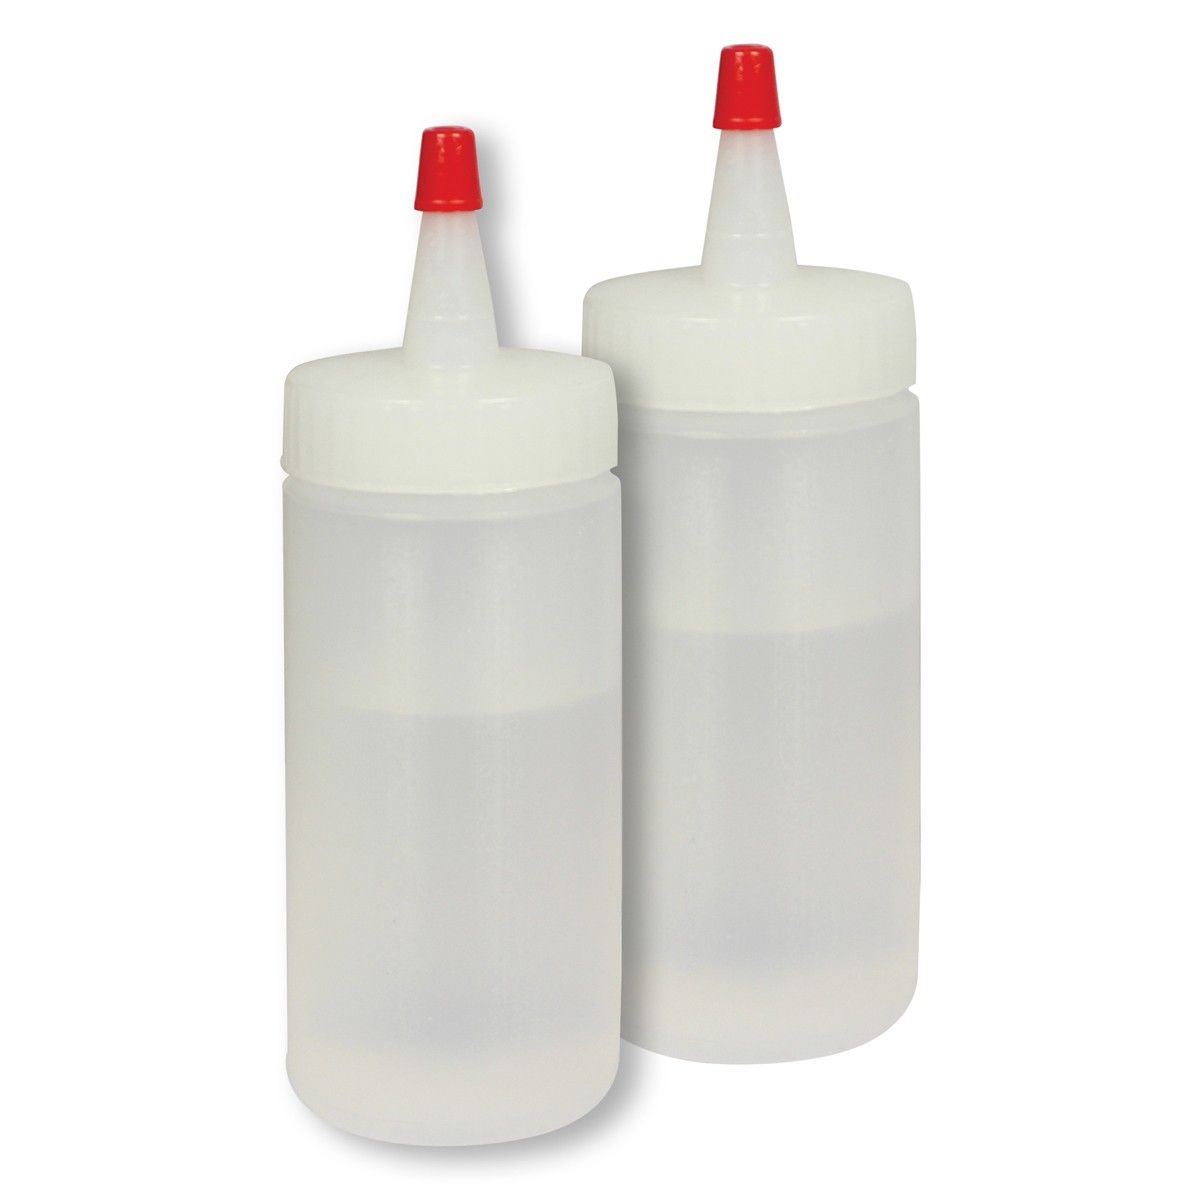 Plastové stláčacie fľaše na zdobenie, 2x 85g, PME Plastic Squeeze Bottles, SB174